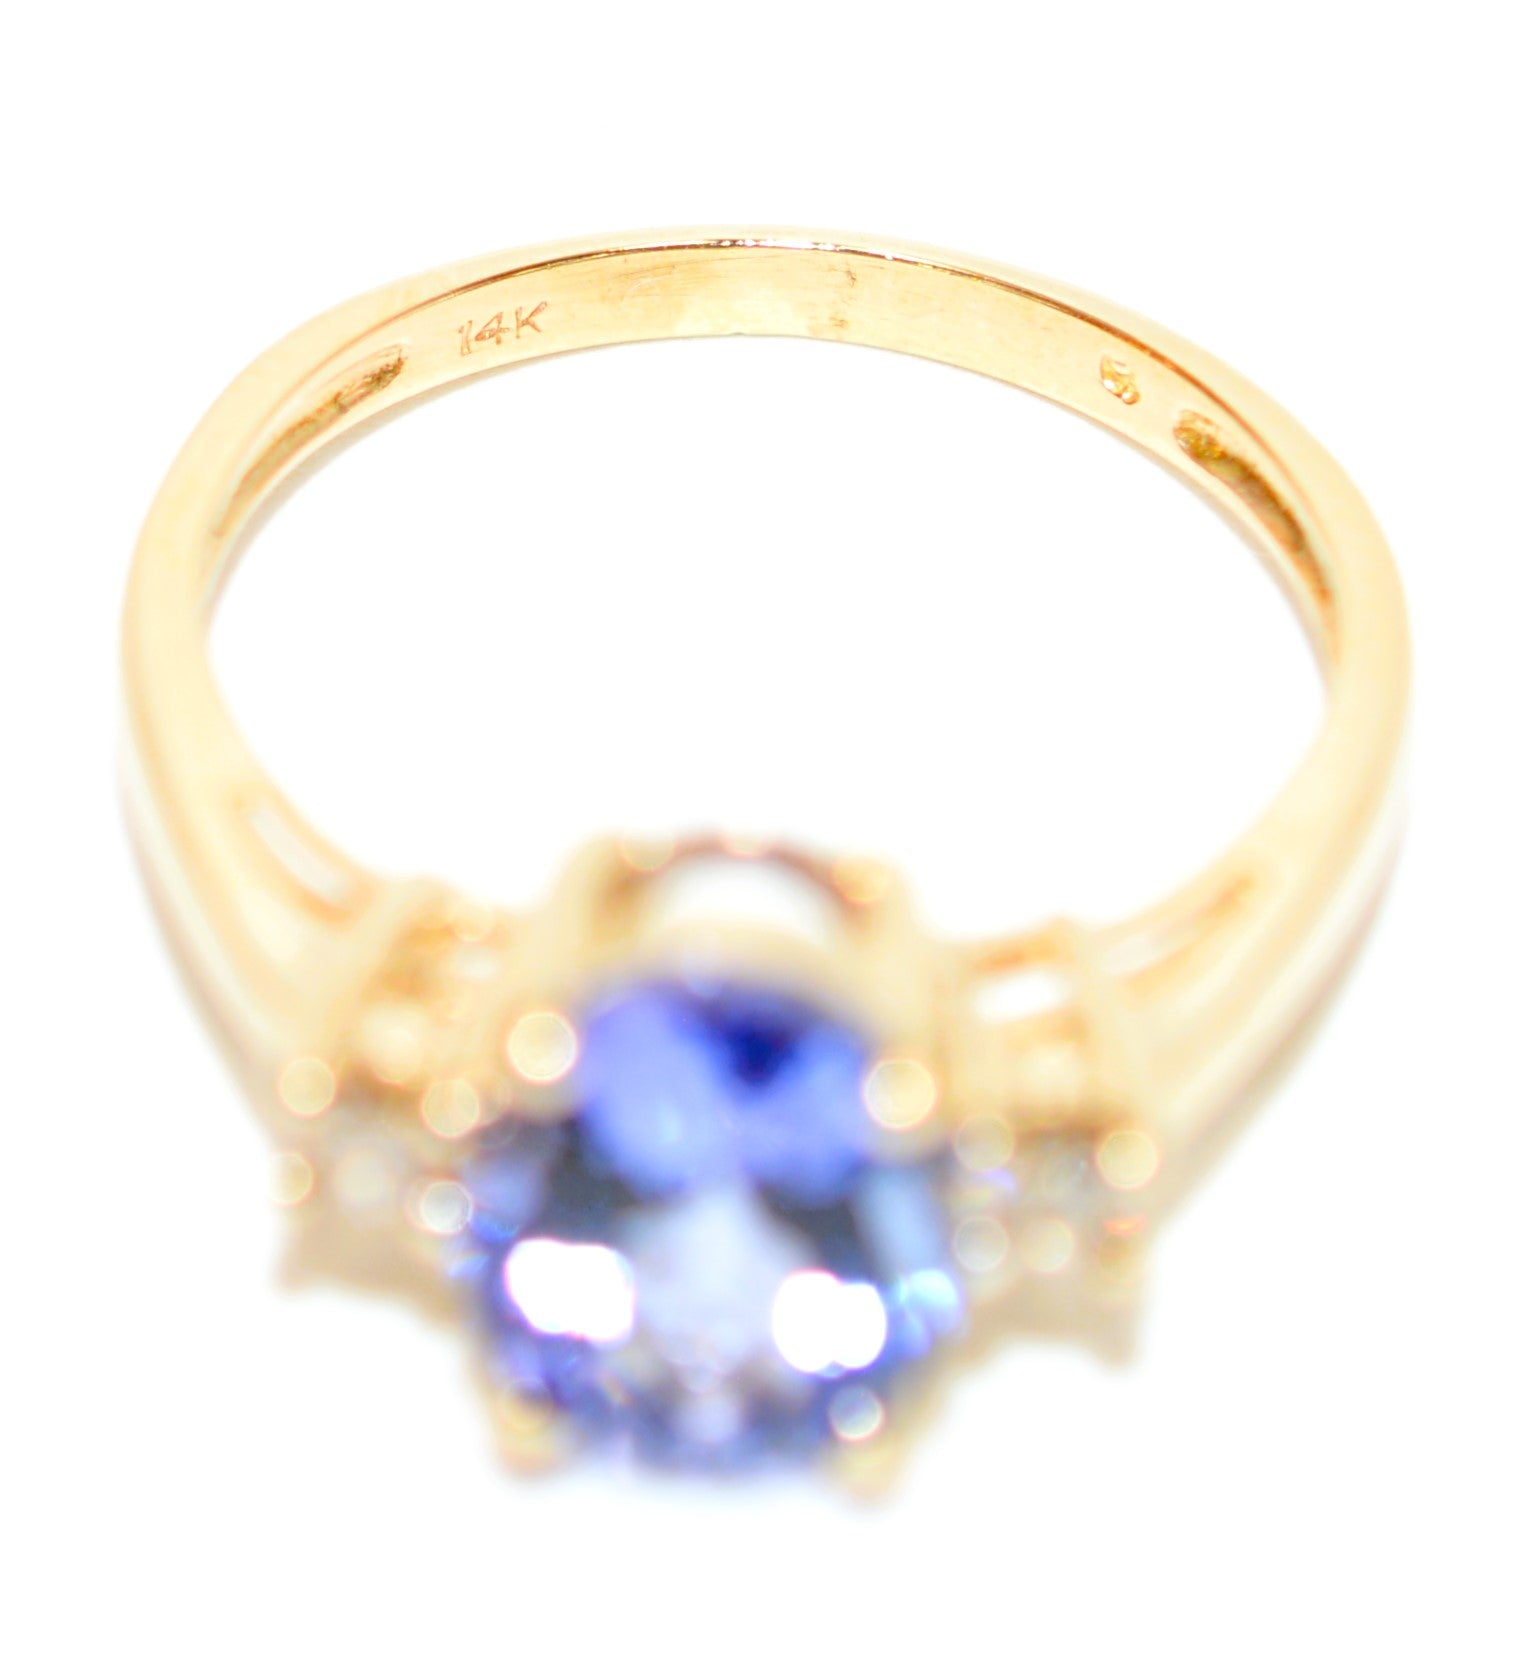 Natural Tanzanite & Diamond Ring 14K Solid Gold 2.86tcw Gemstone Ring Birthstone Ring Engagement Ring Cocktail Ring Estate Jewellery Blue